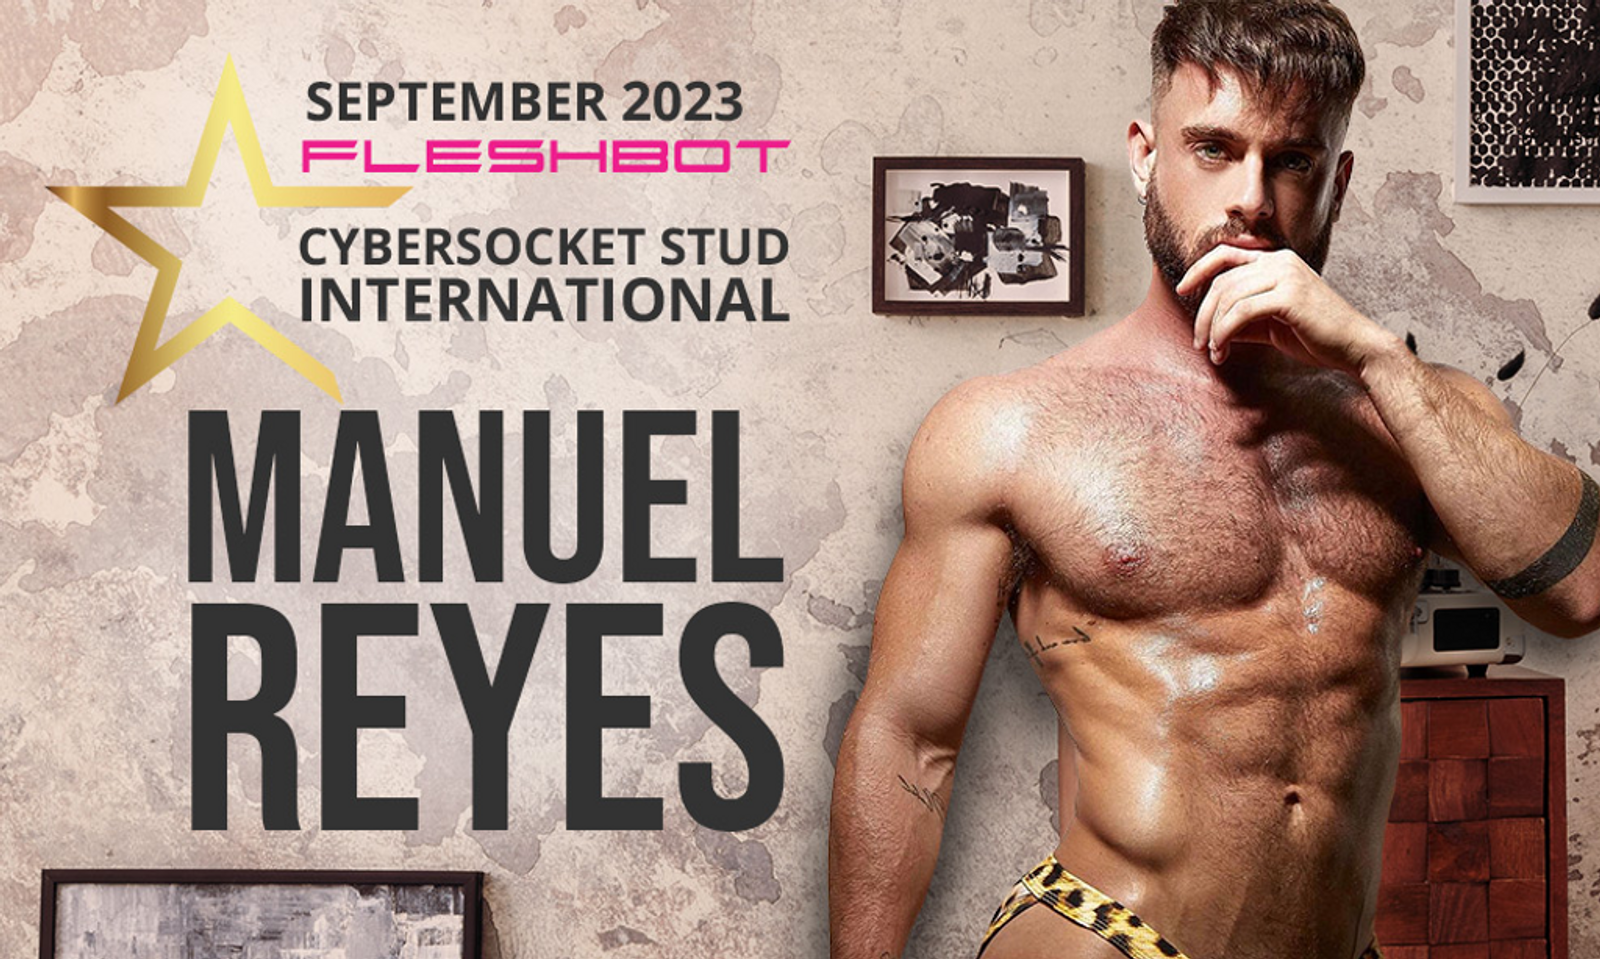 Manuel Reyes Named 'Cybersocket Stud International' for September